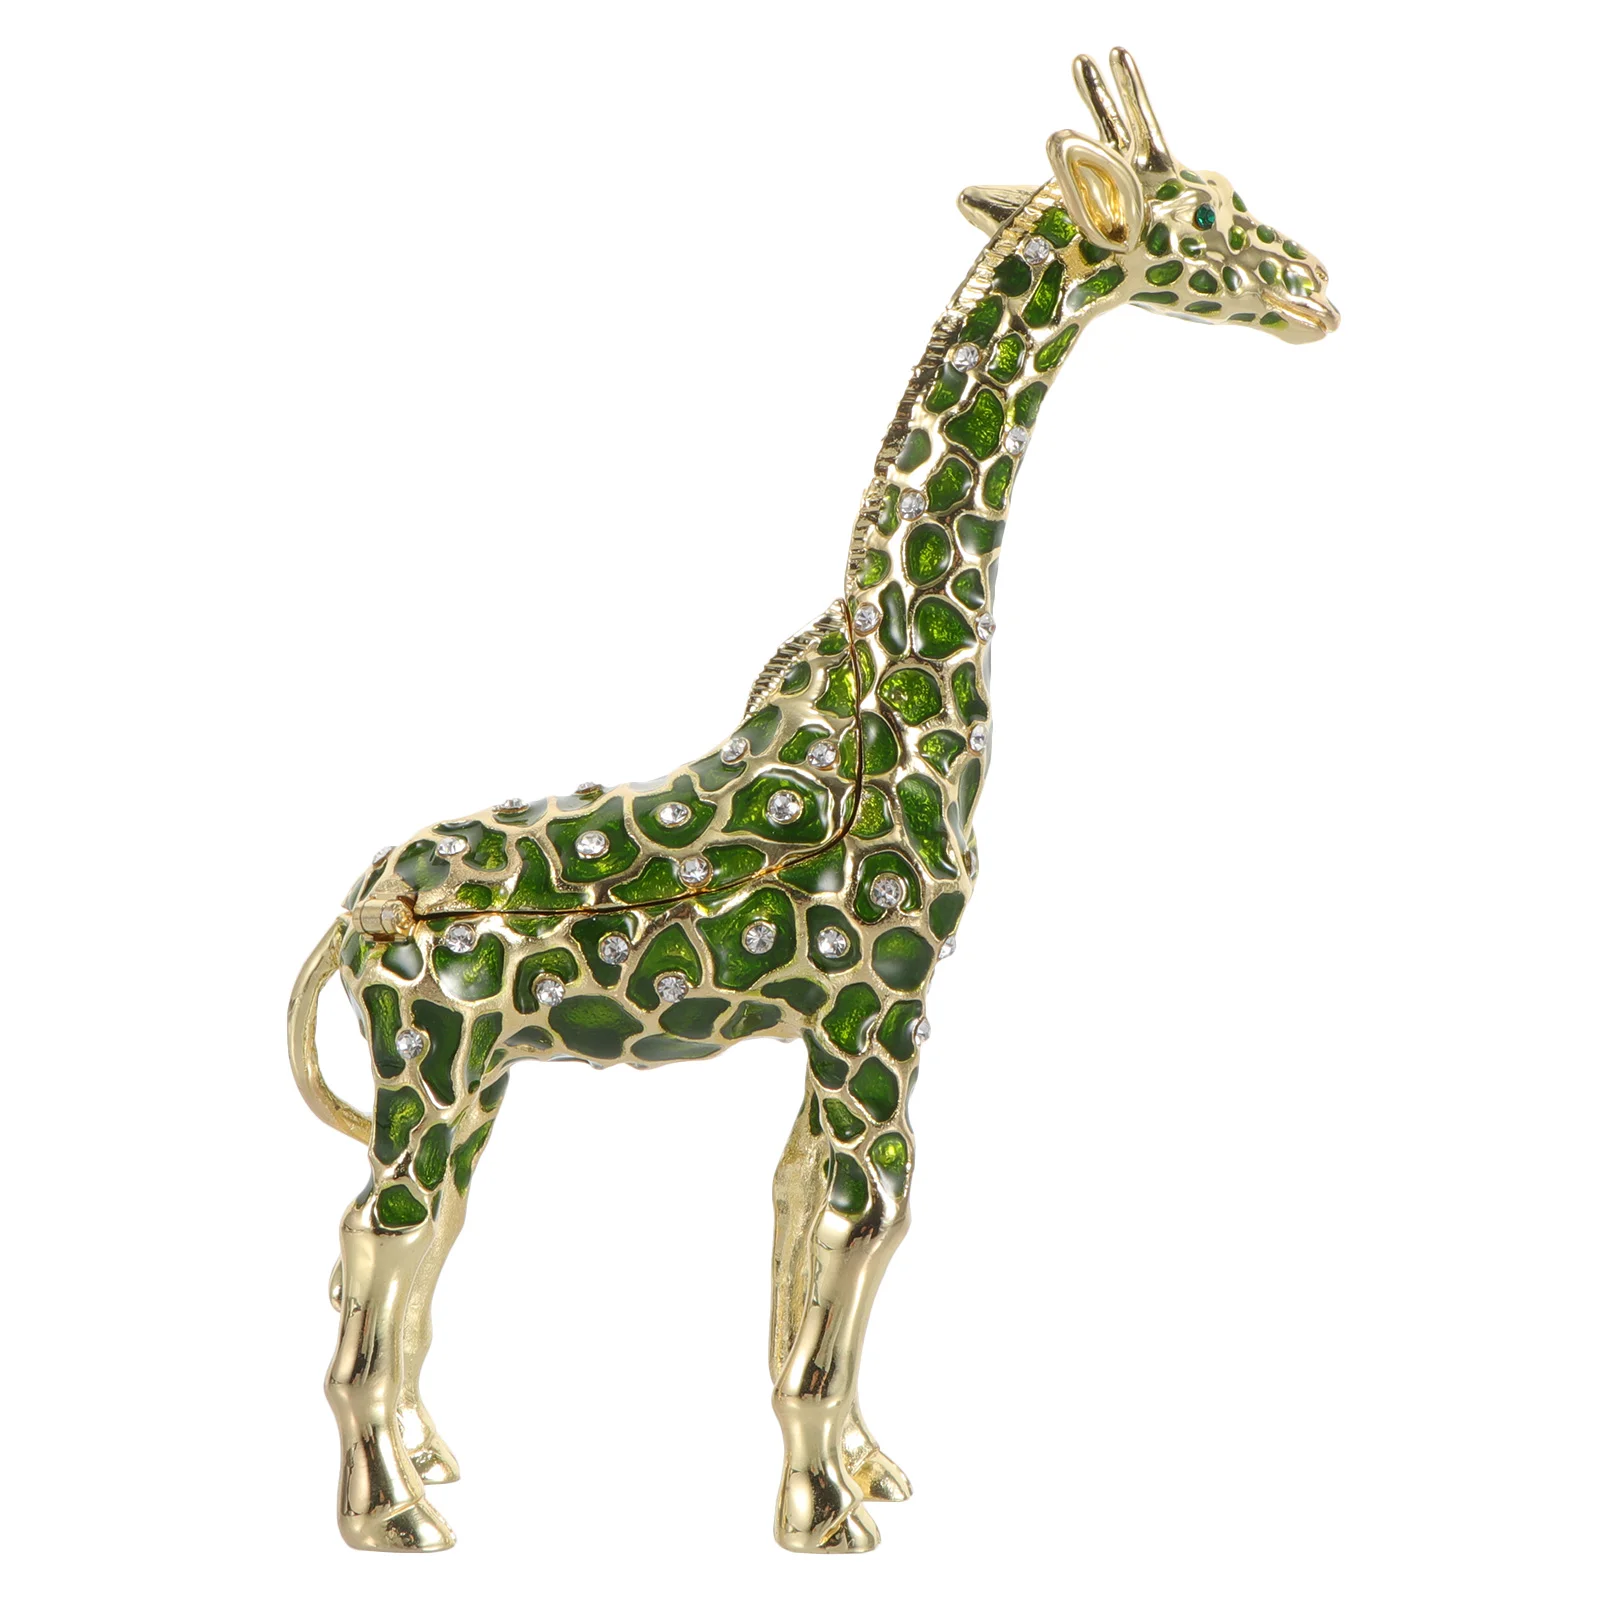 

Trinket Box Craft Enameled Giraffe Trinket Box Decorative Hinged Jewelry Jewelry Box Figurine Keepsake Ring Holder Gift Metal